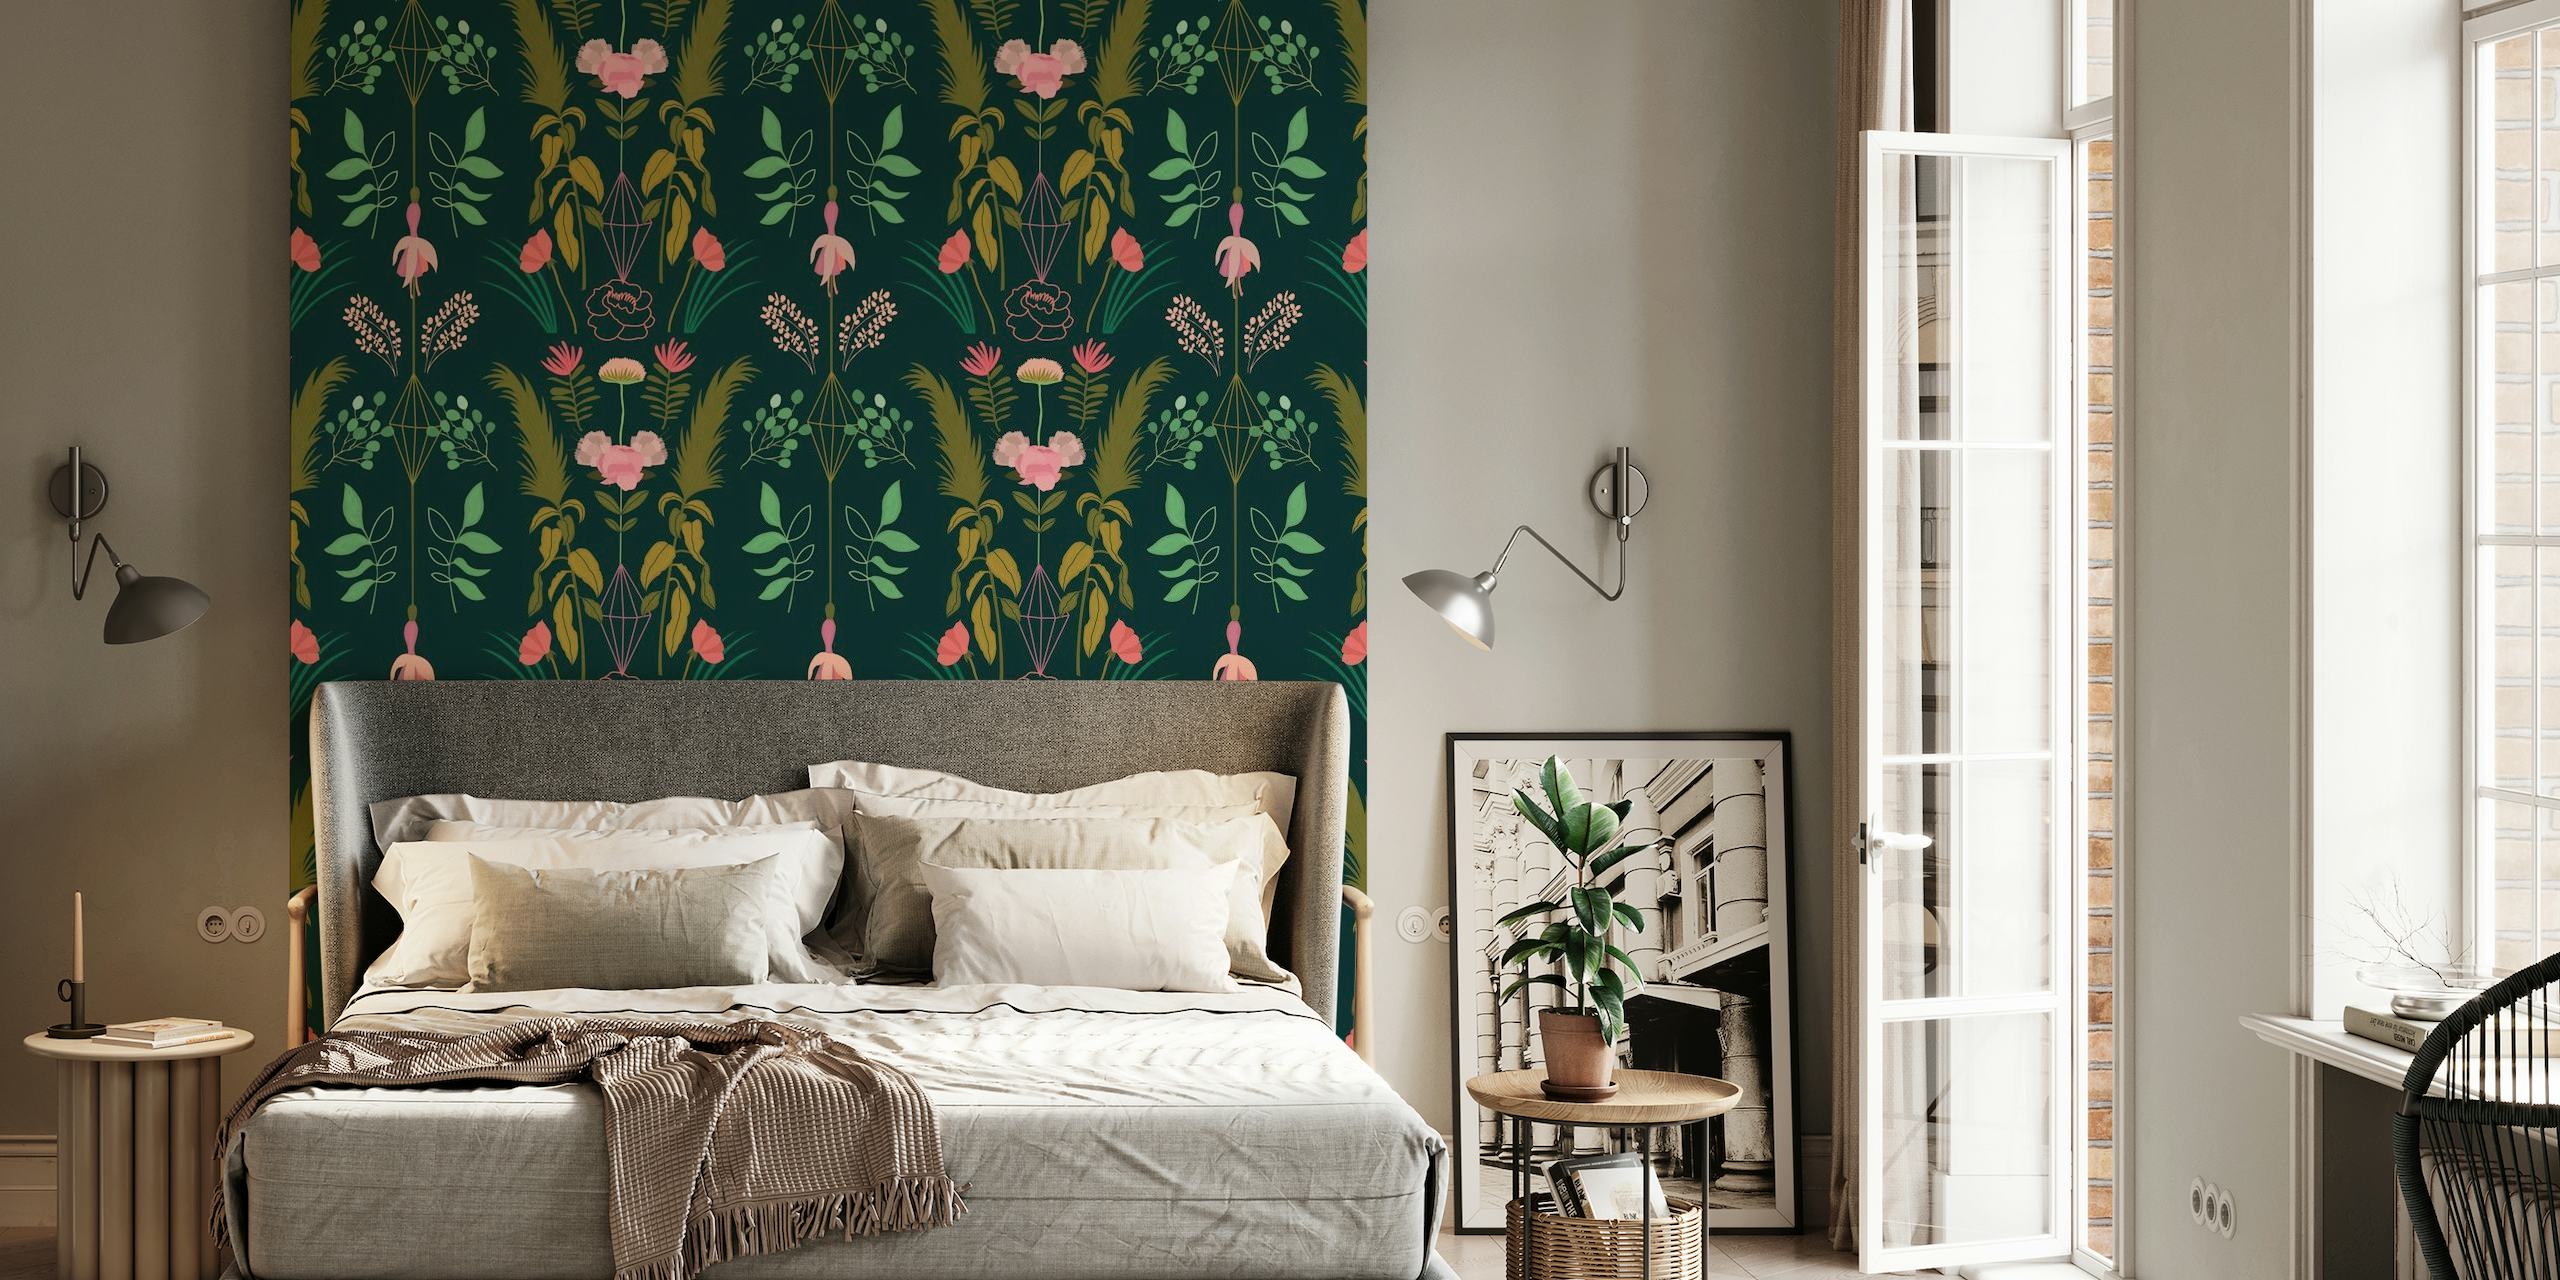 Stylish deco pampas grass pattern on dark wallpaper for home decor